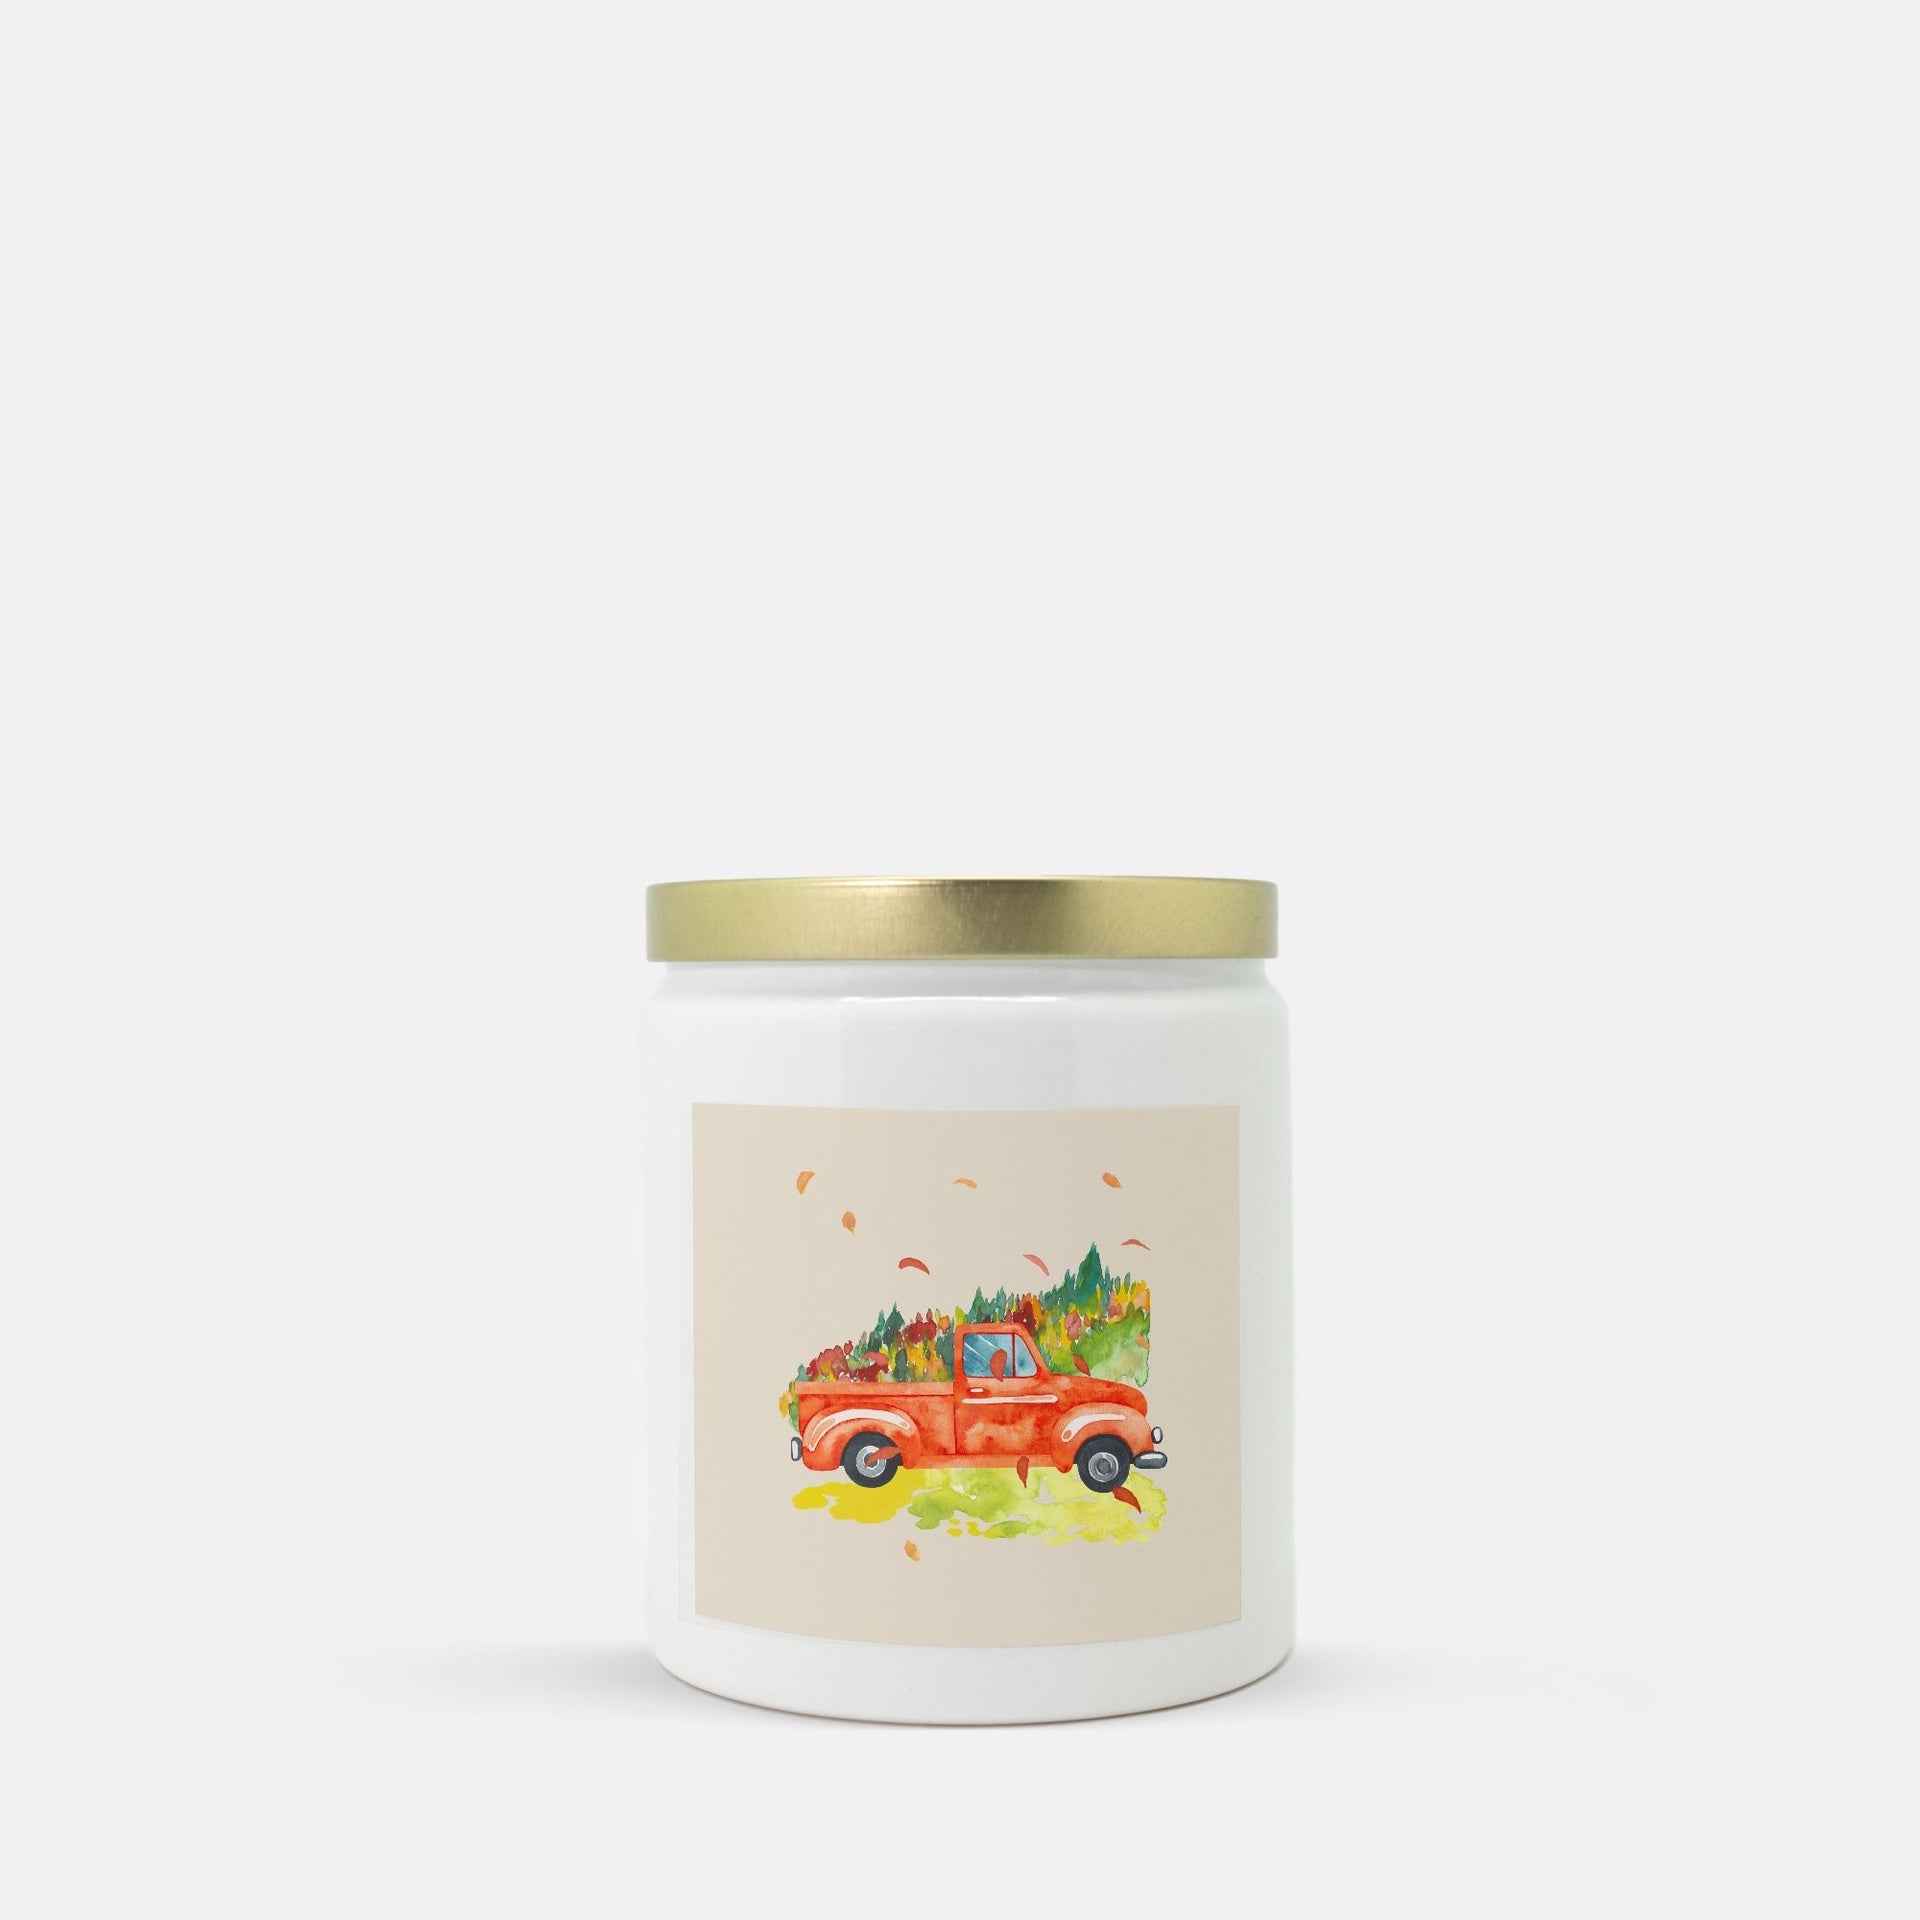 Lifestyle Details - Orange Rustic Truck & Leaves Ceramic Candle w Gold Lid - Macintosh